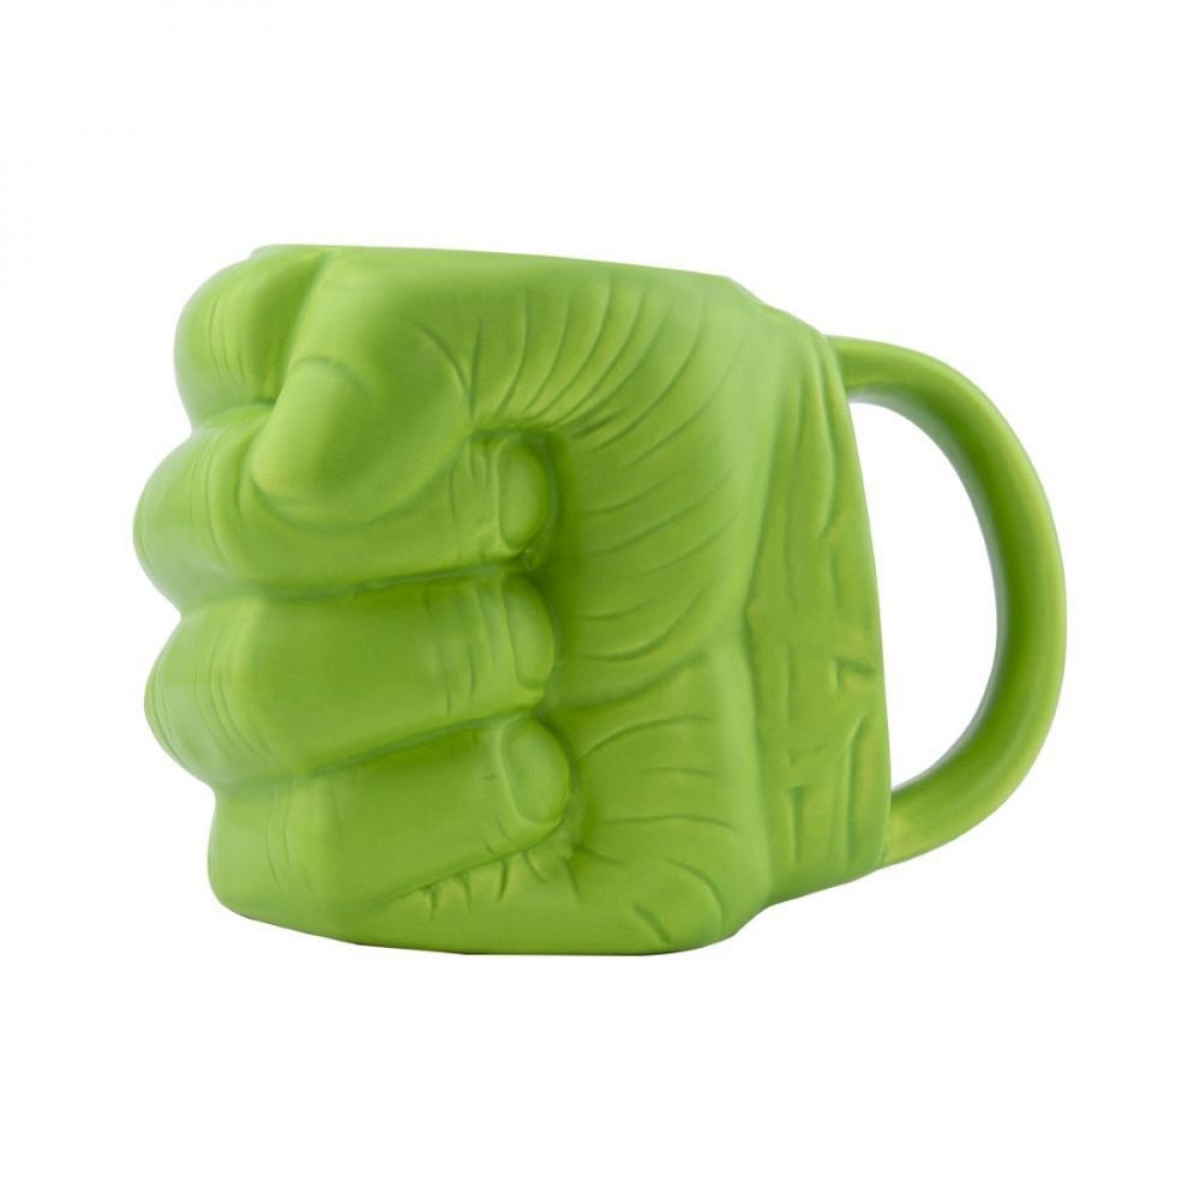 Picture of Incredible Hulk 875388 Fist Shaped 18 oz Ceramic Mug